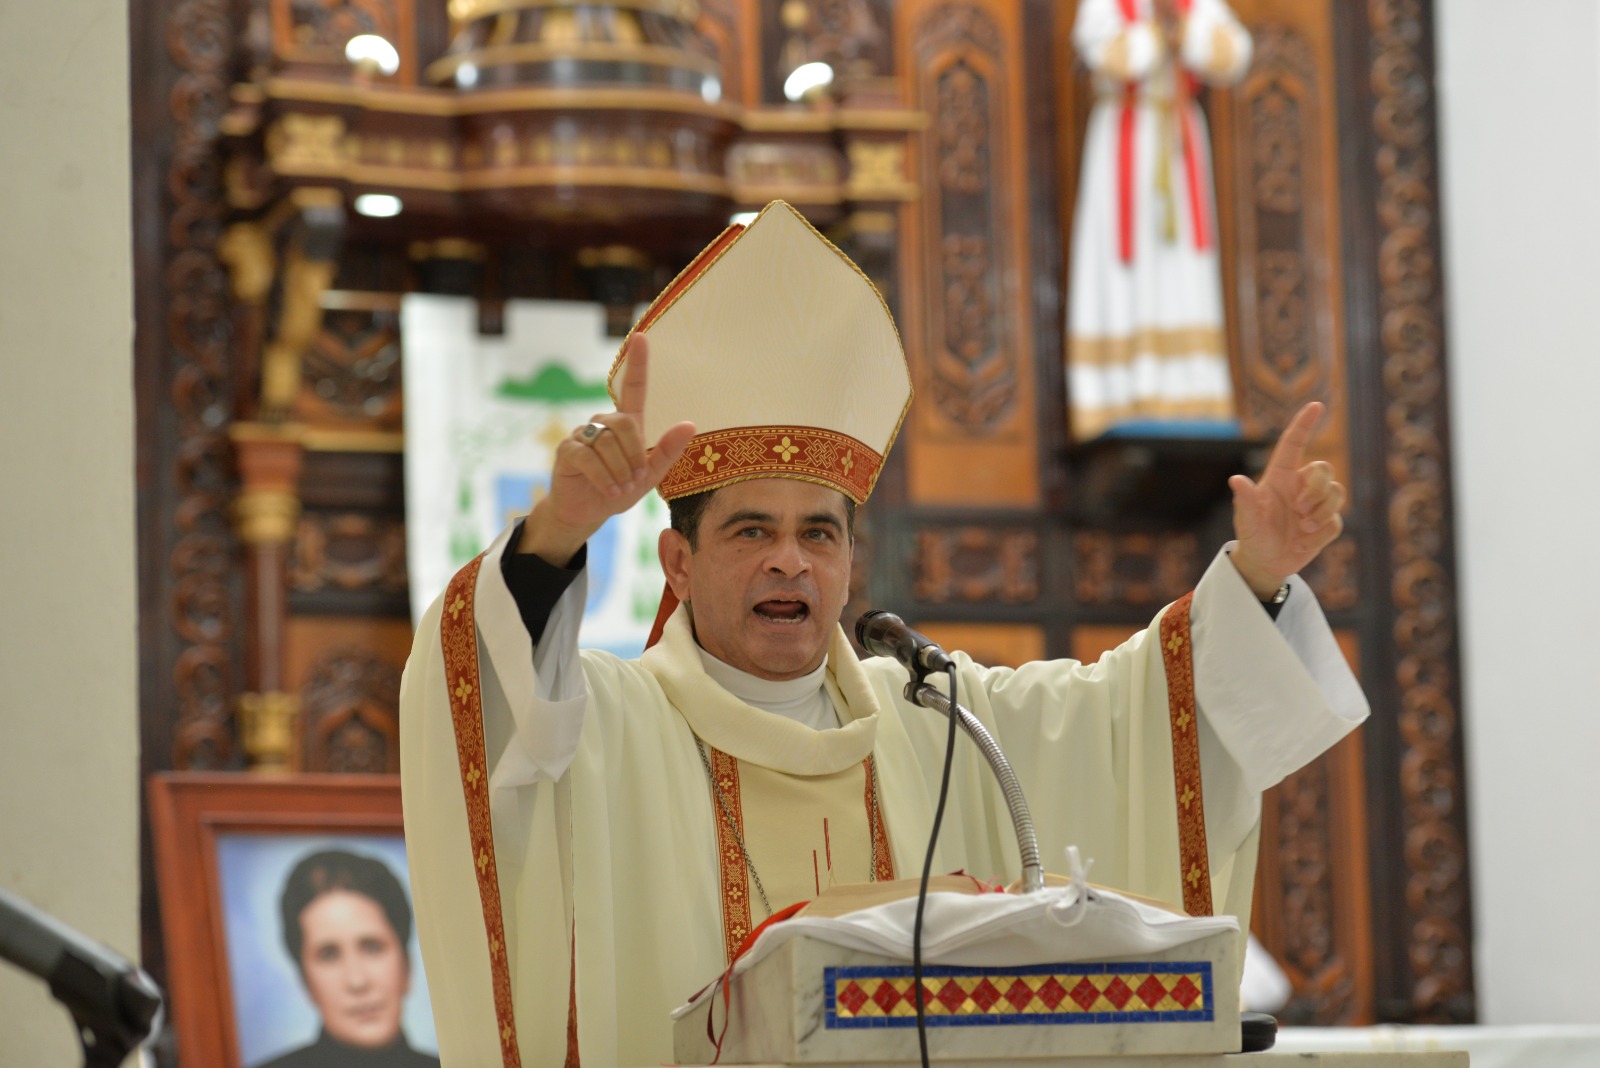 obispo Rolando Álvarez